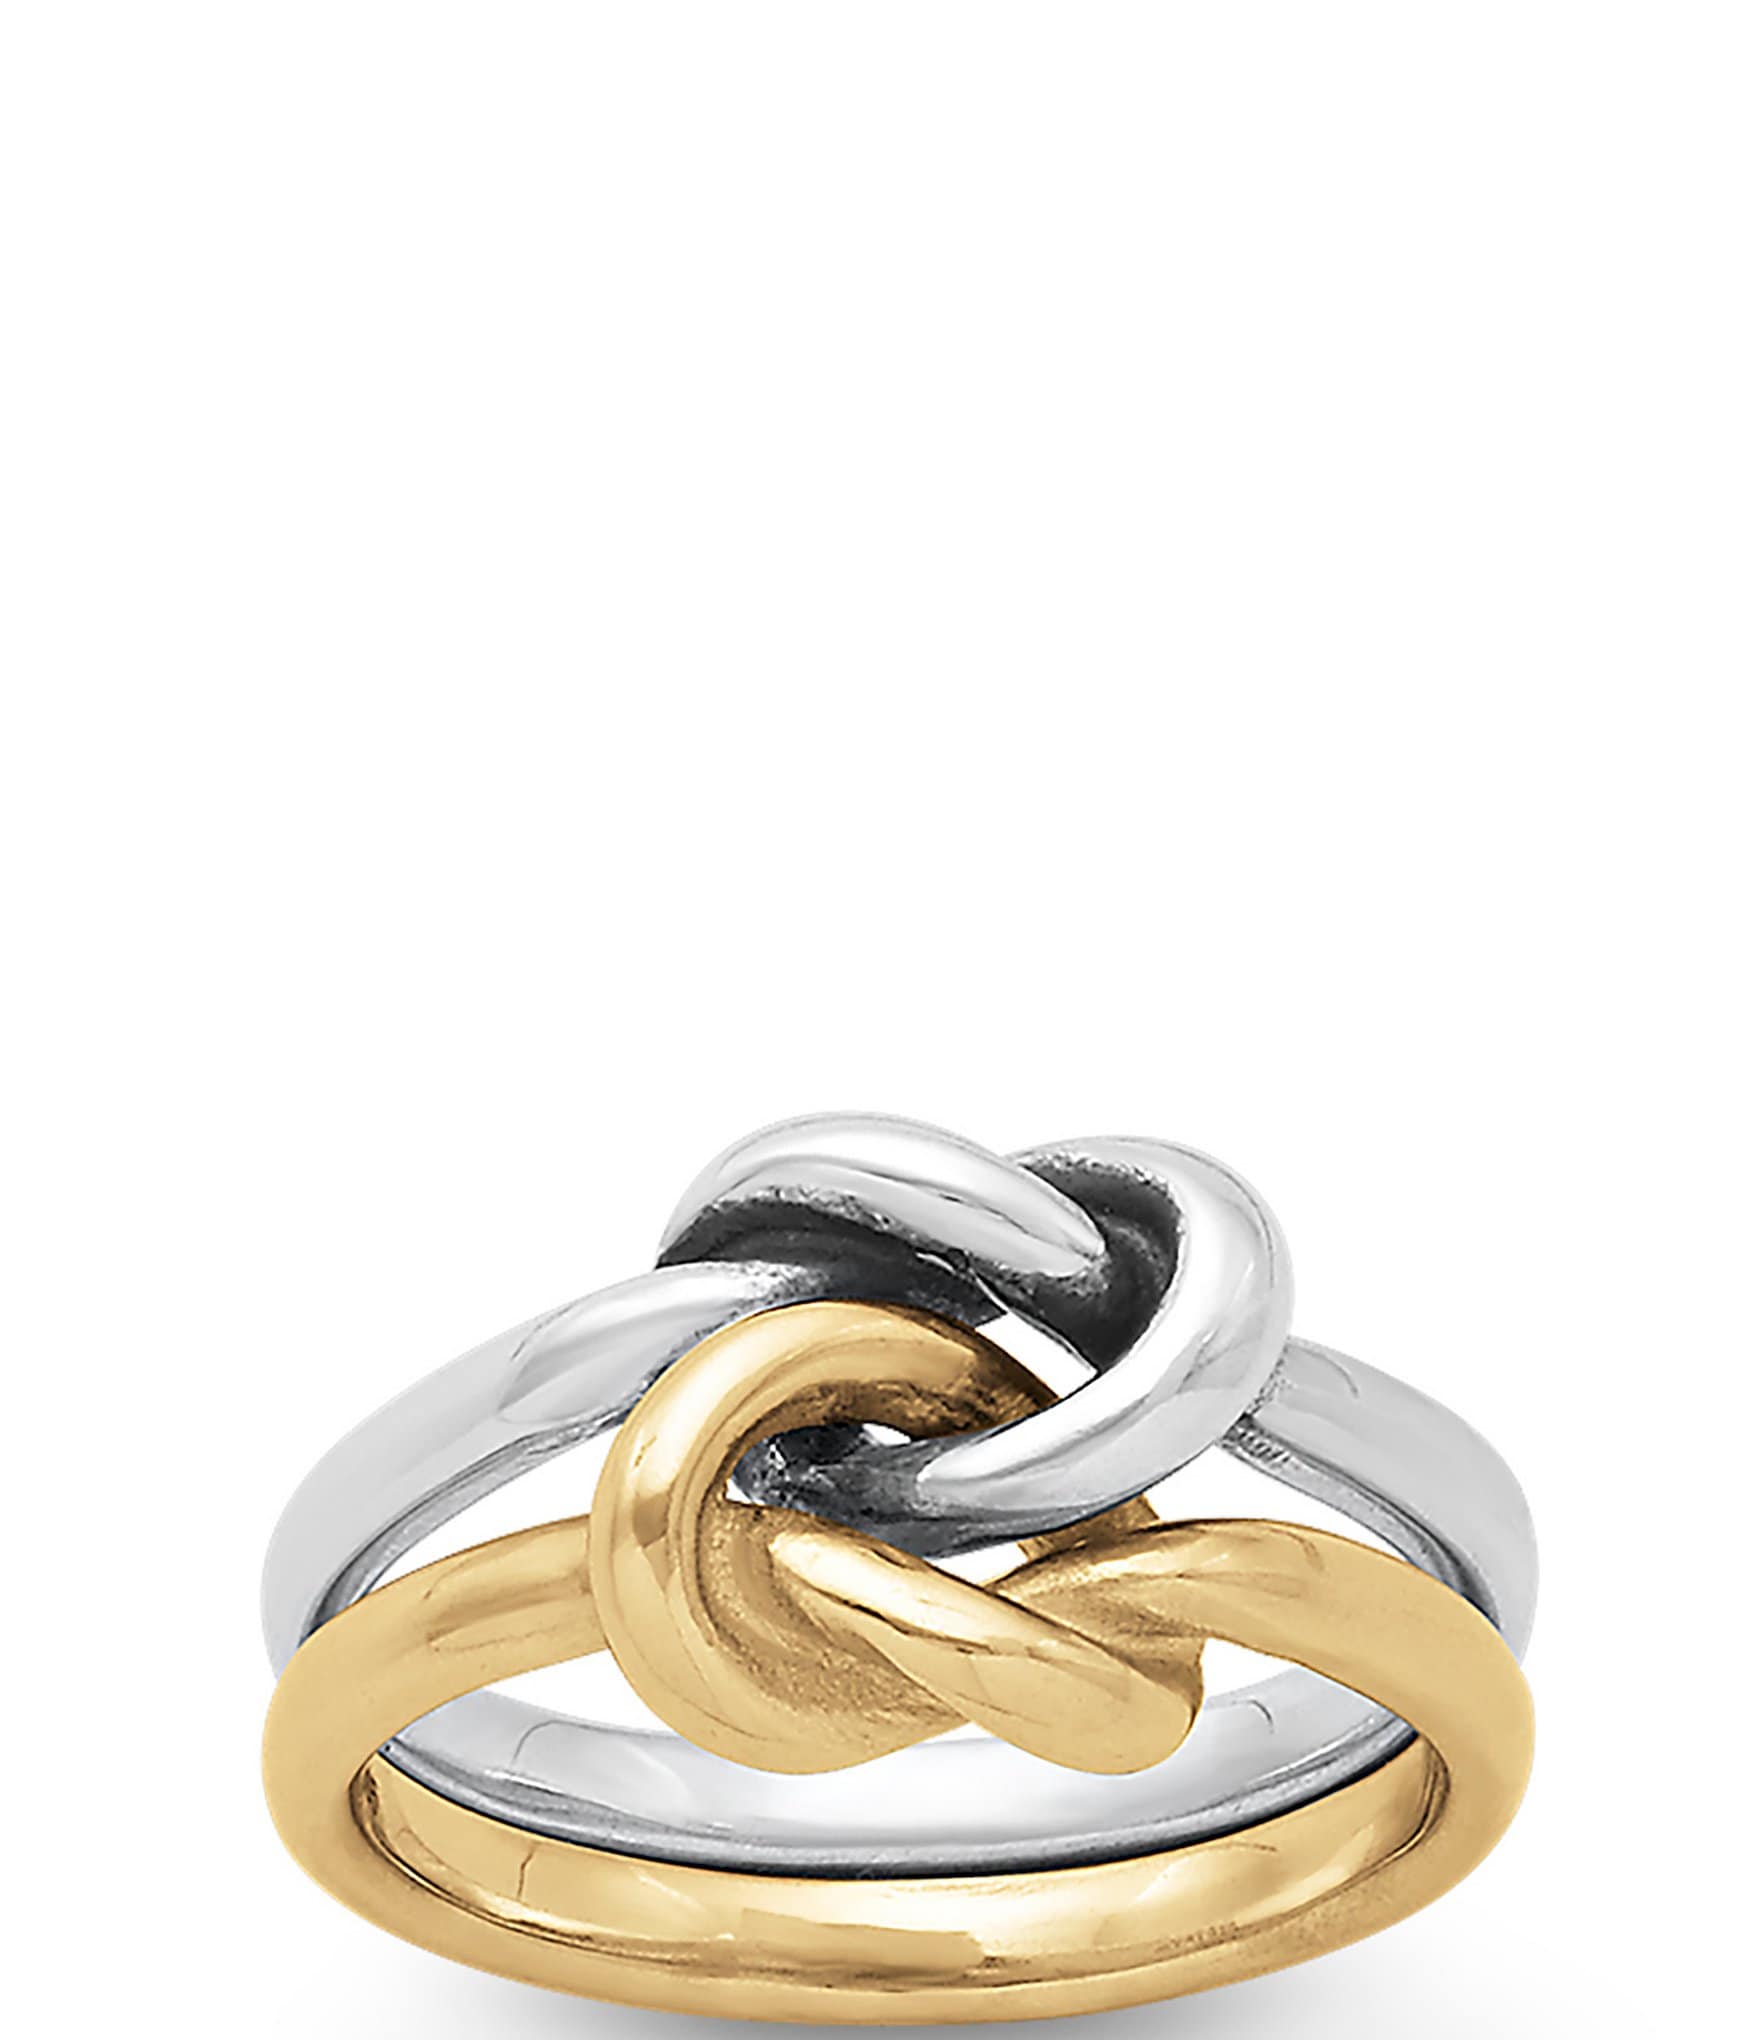 Kojis 9ct Gold Vintage Lovers Knot Ring | Liberty